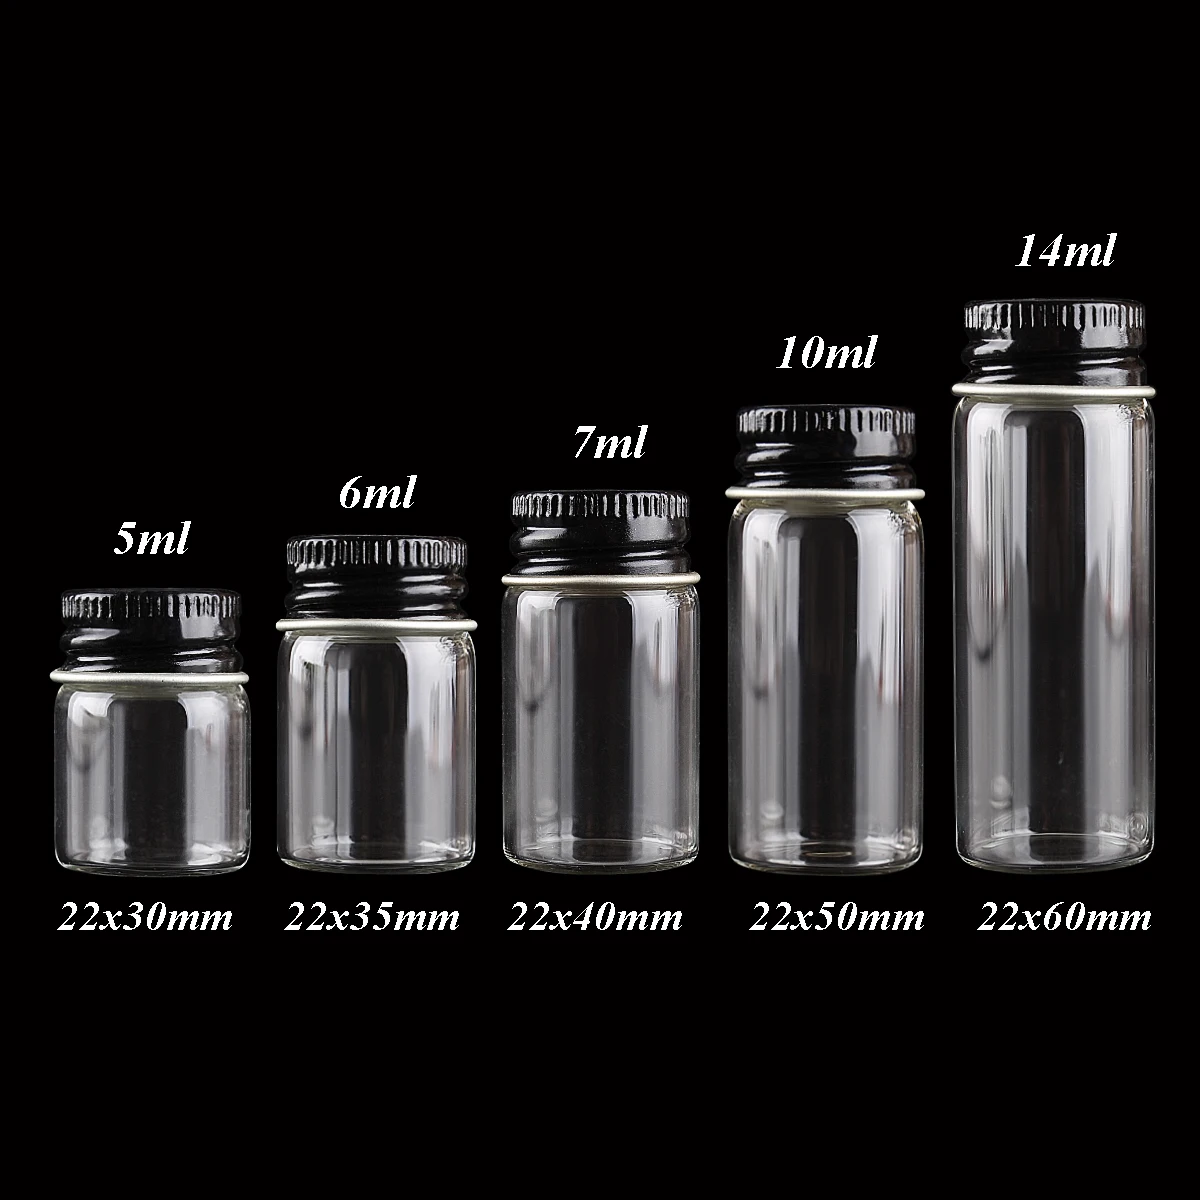 

22mm Jars Small Diameter 48 Craft Pieces Black Glass Aluminium Sizes With 5-14ml Glass U-pick Wedding 5 Gift Bottles Caps